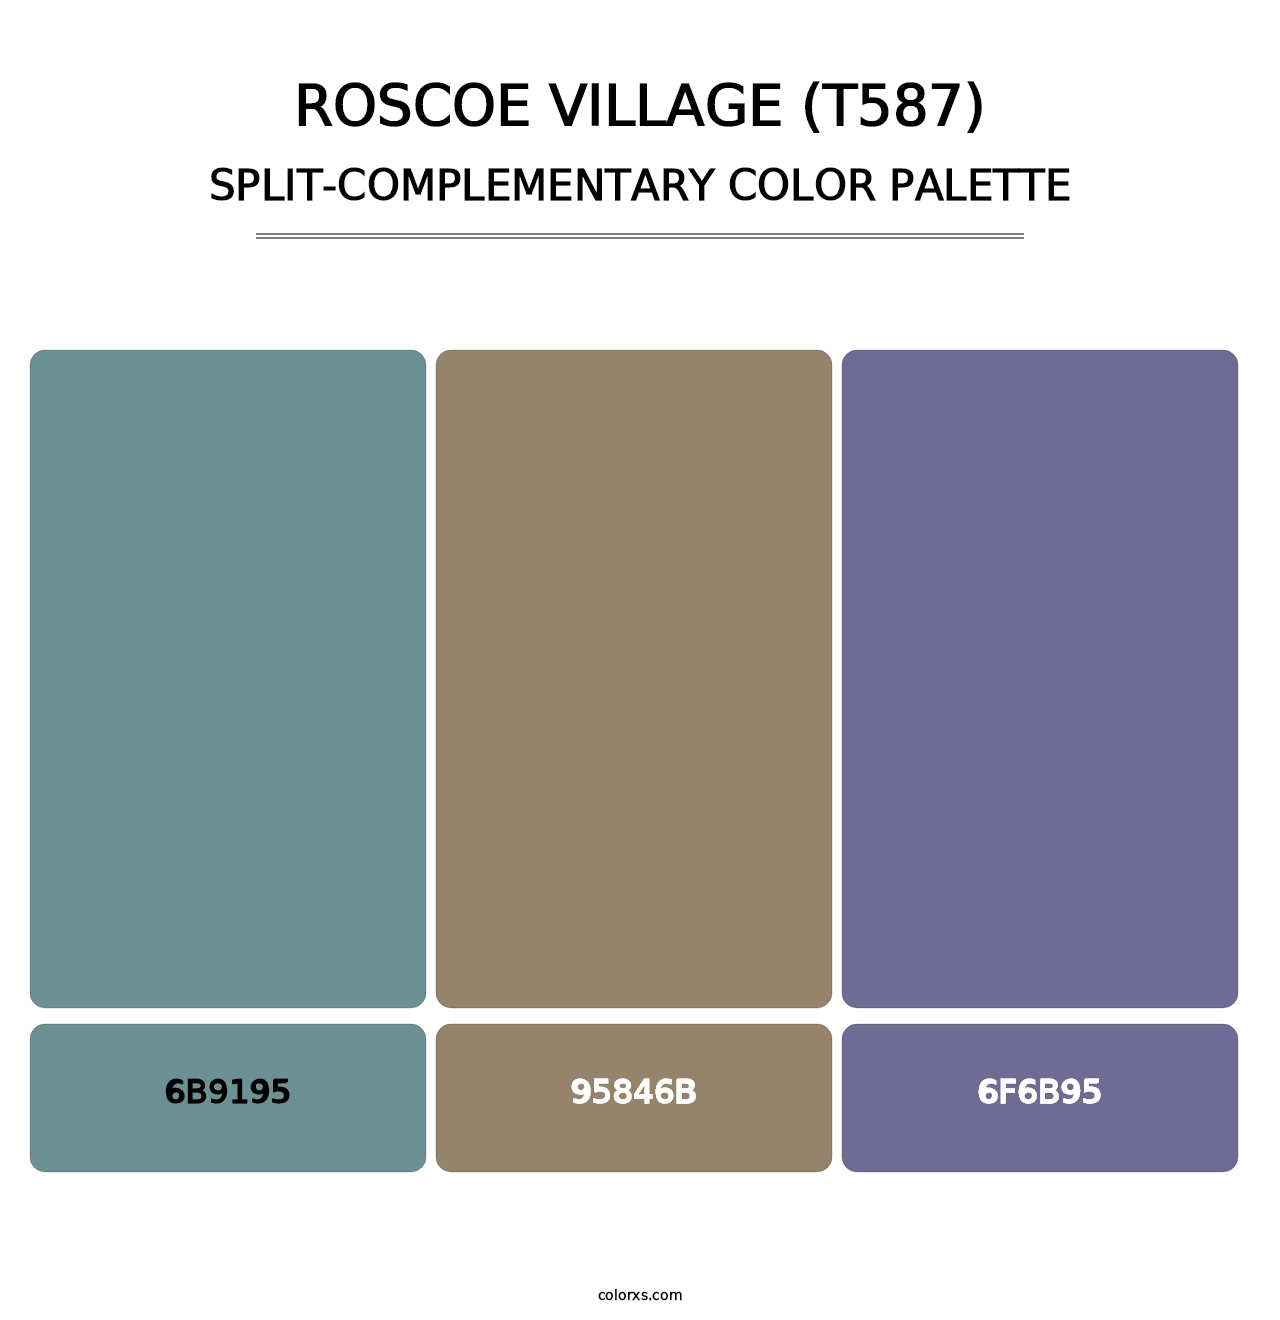 Roscoe Village (T587) - Split-Complementary Color Palette